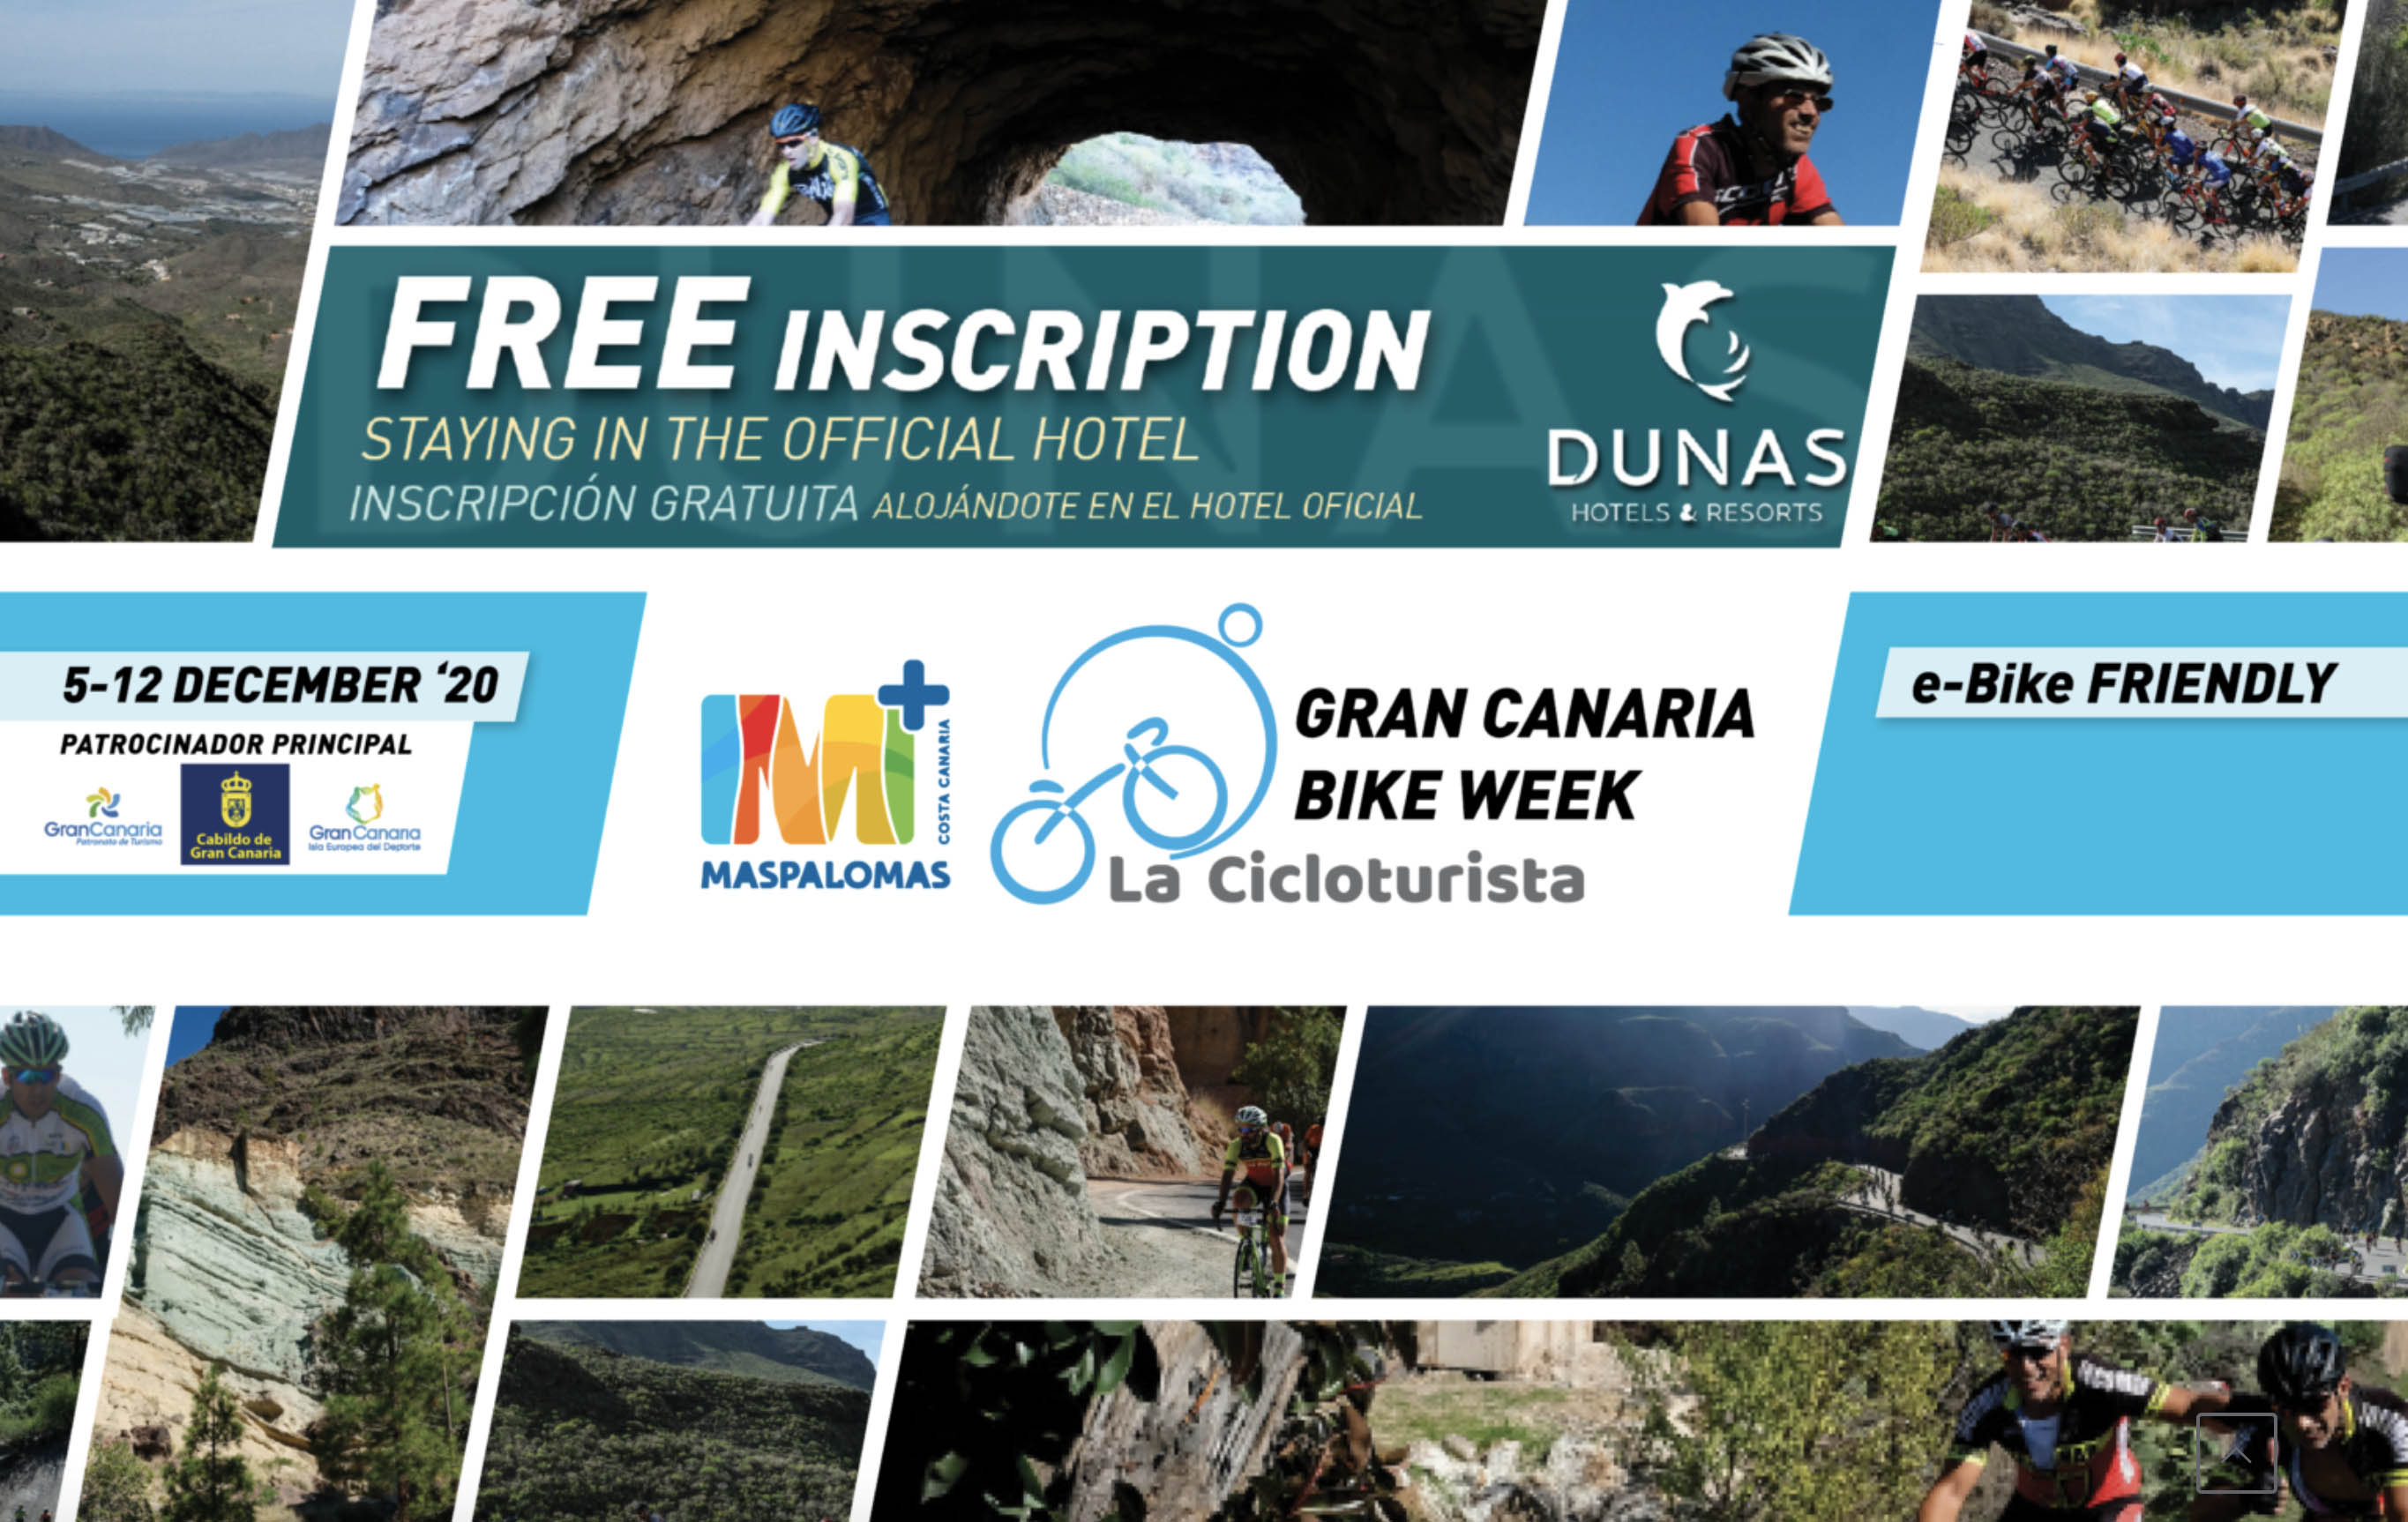 cicloturista-fuente-grancanaria-bike-week-1.jpg 